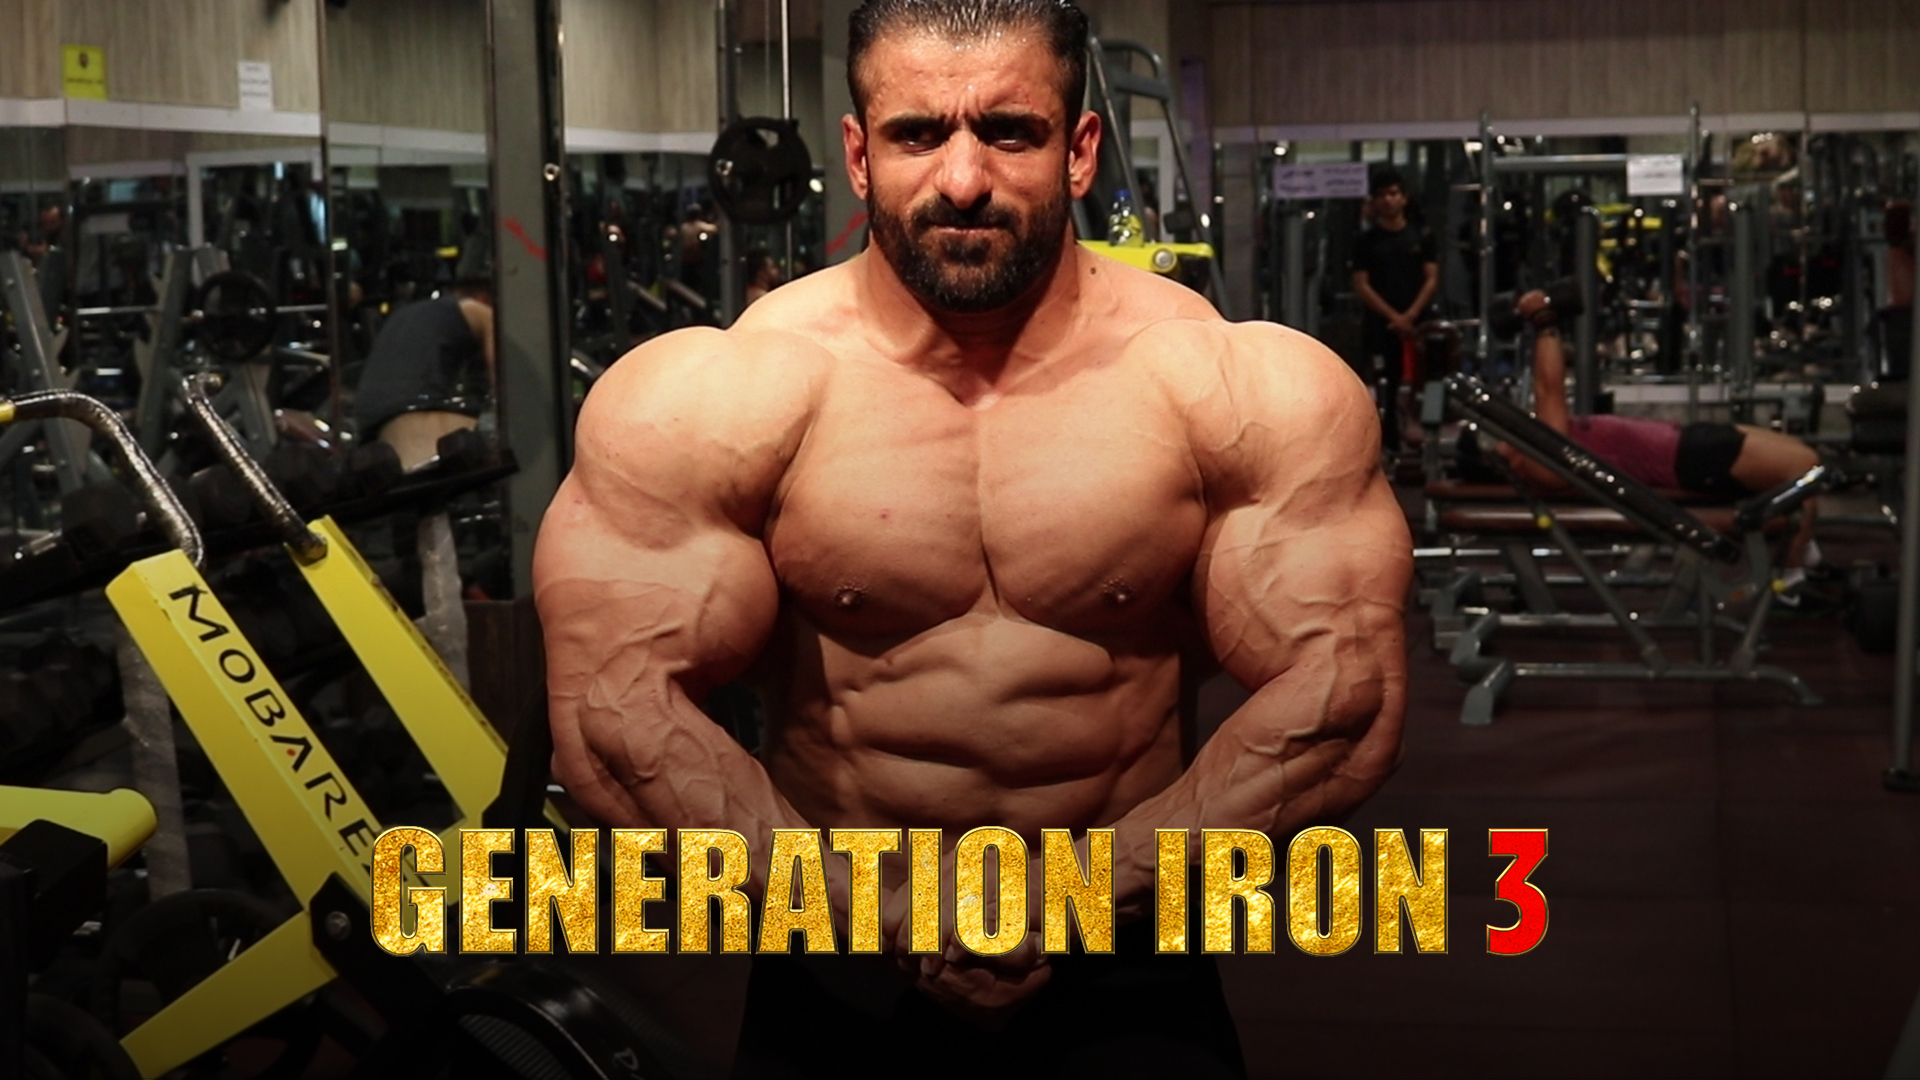 WATCH: Generation Iron 3 Trailer